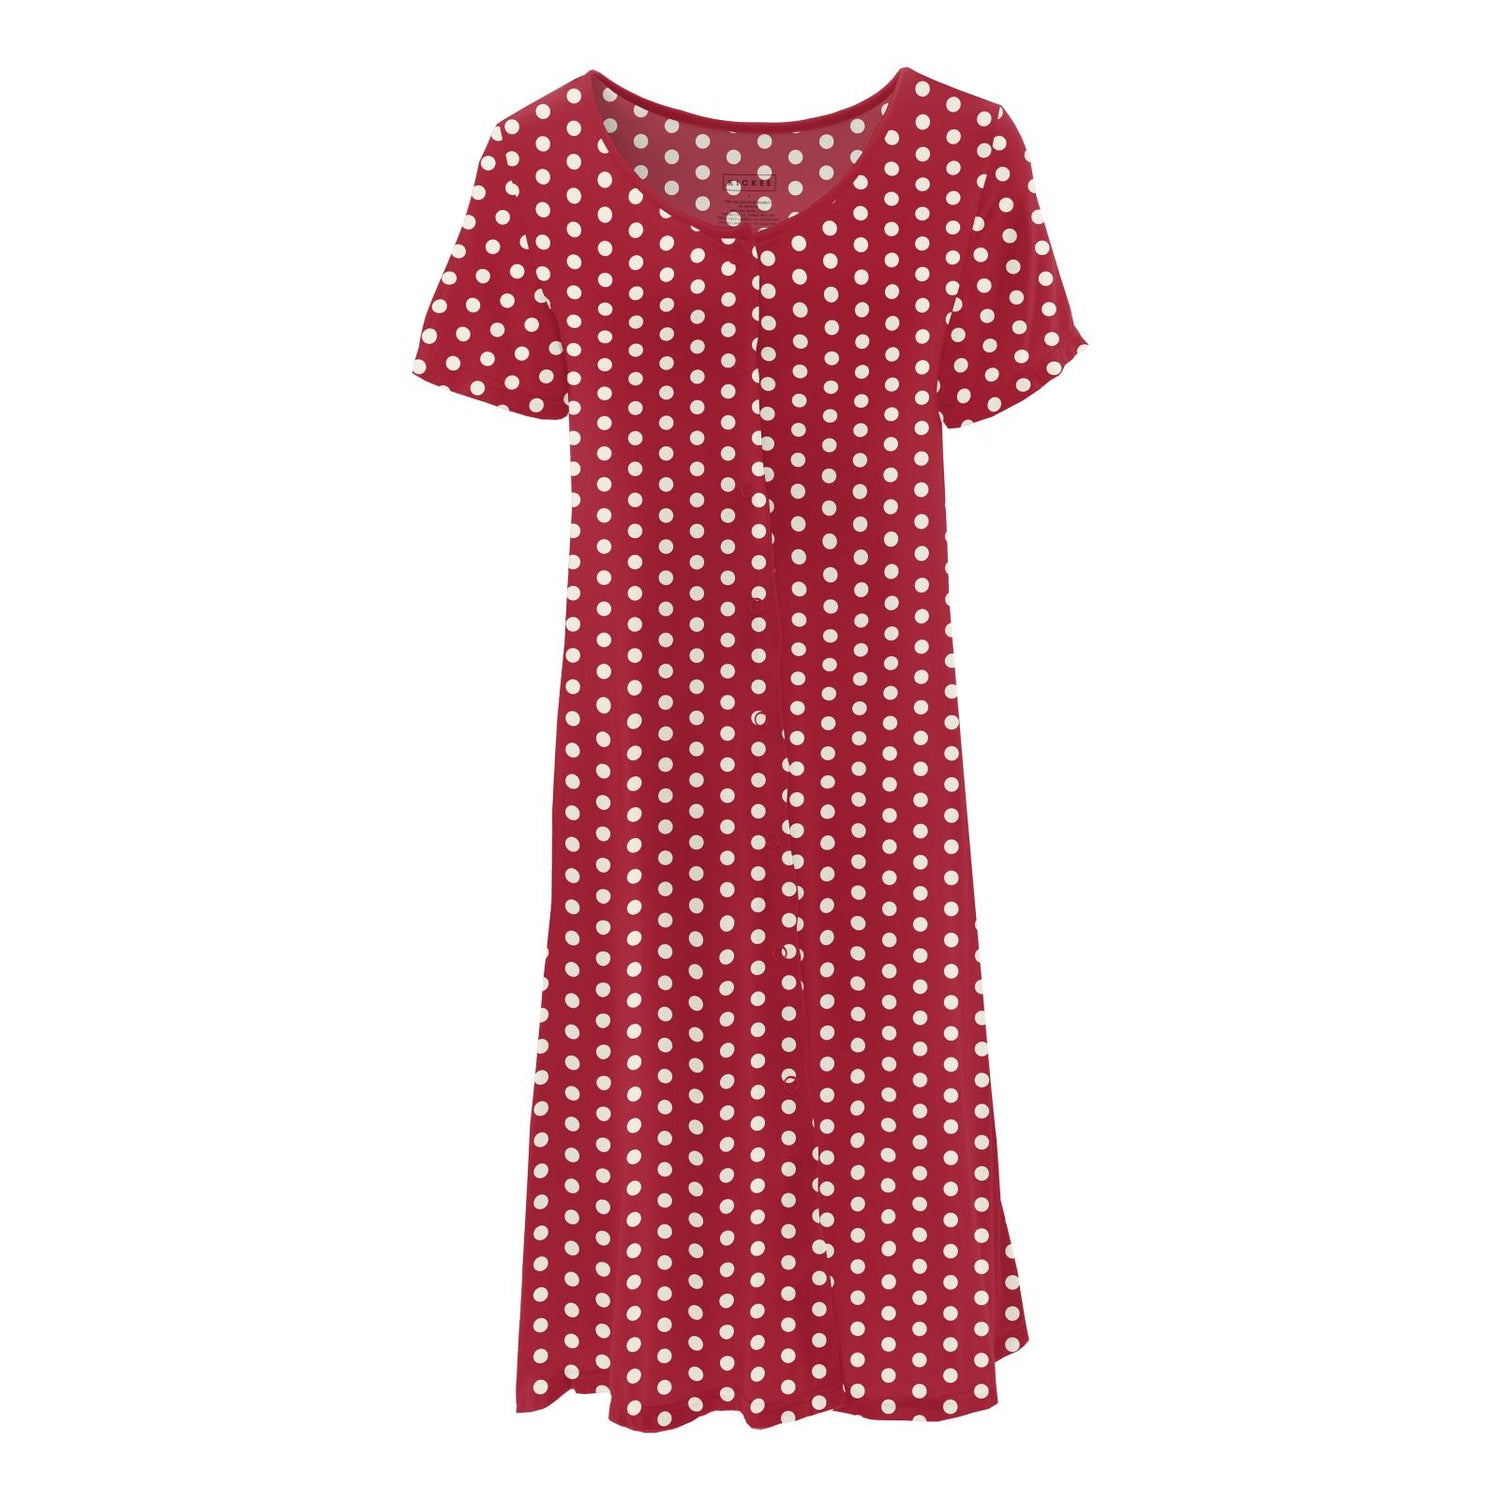 Women's Print Nursing Nightgown in Candy Apple Polka Dots